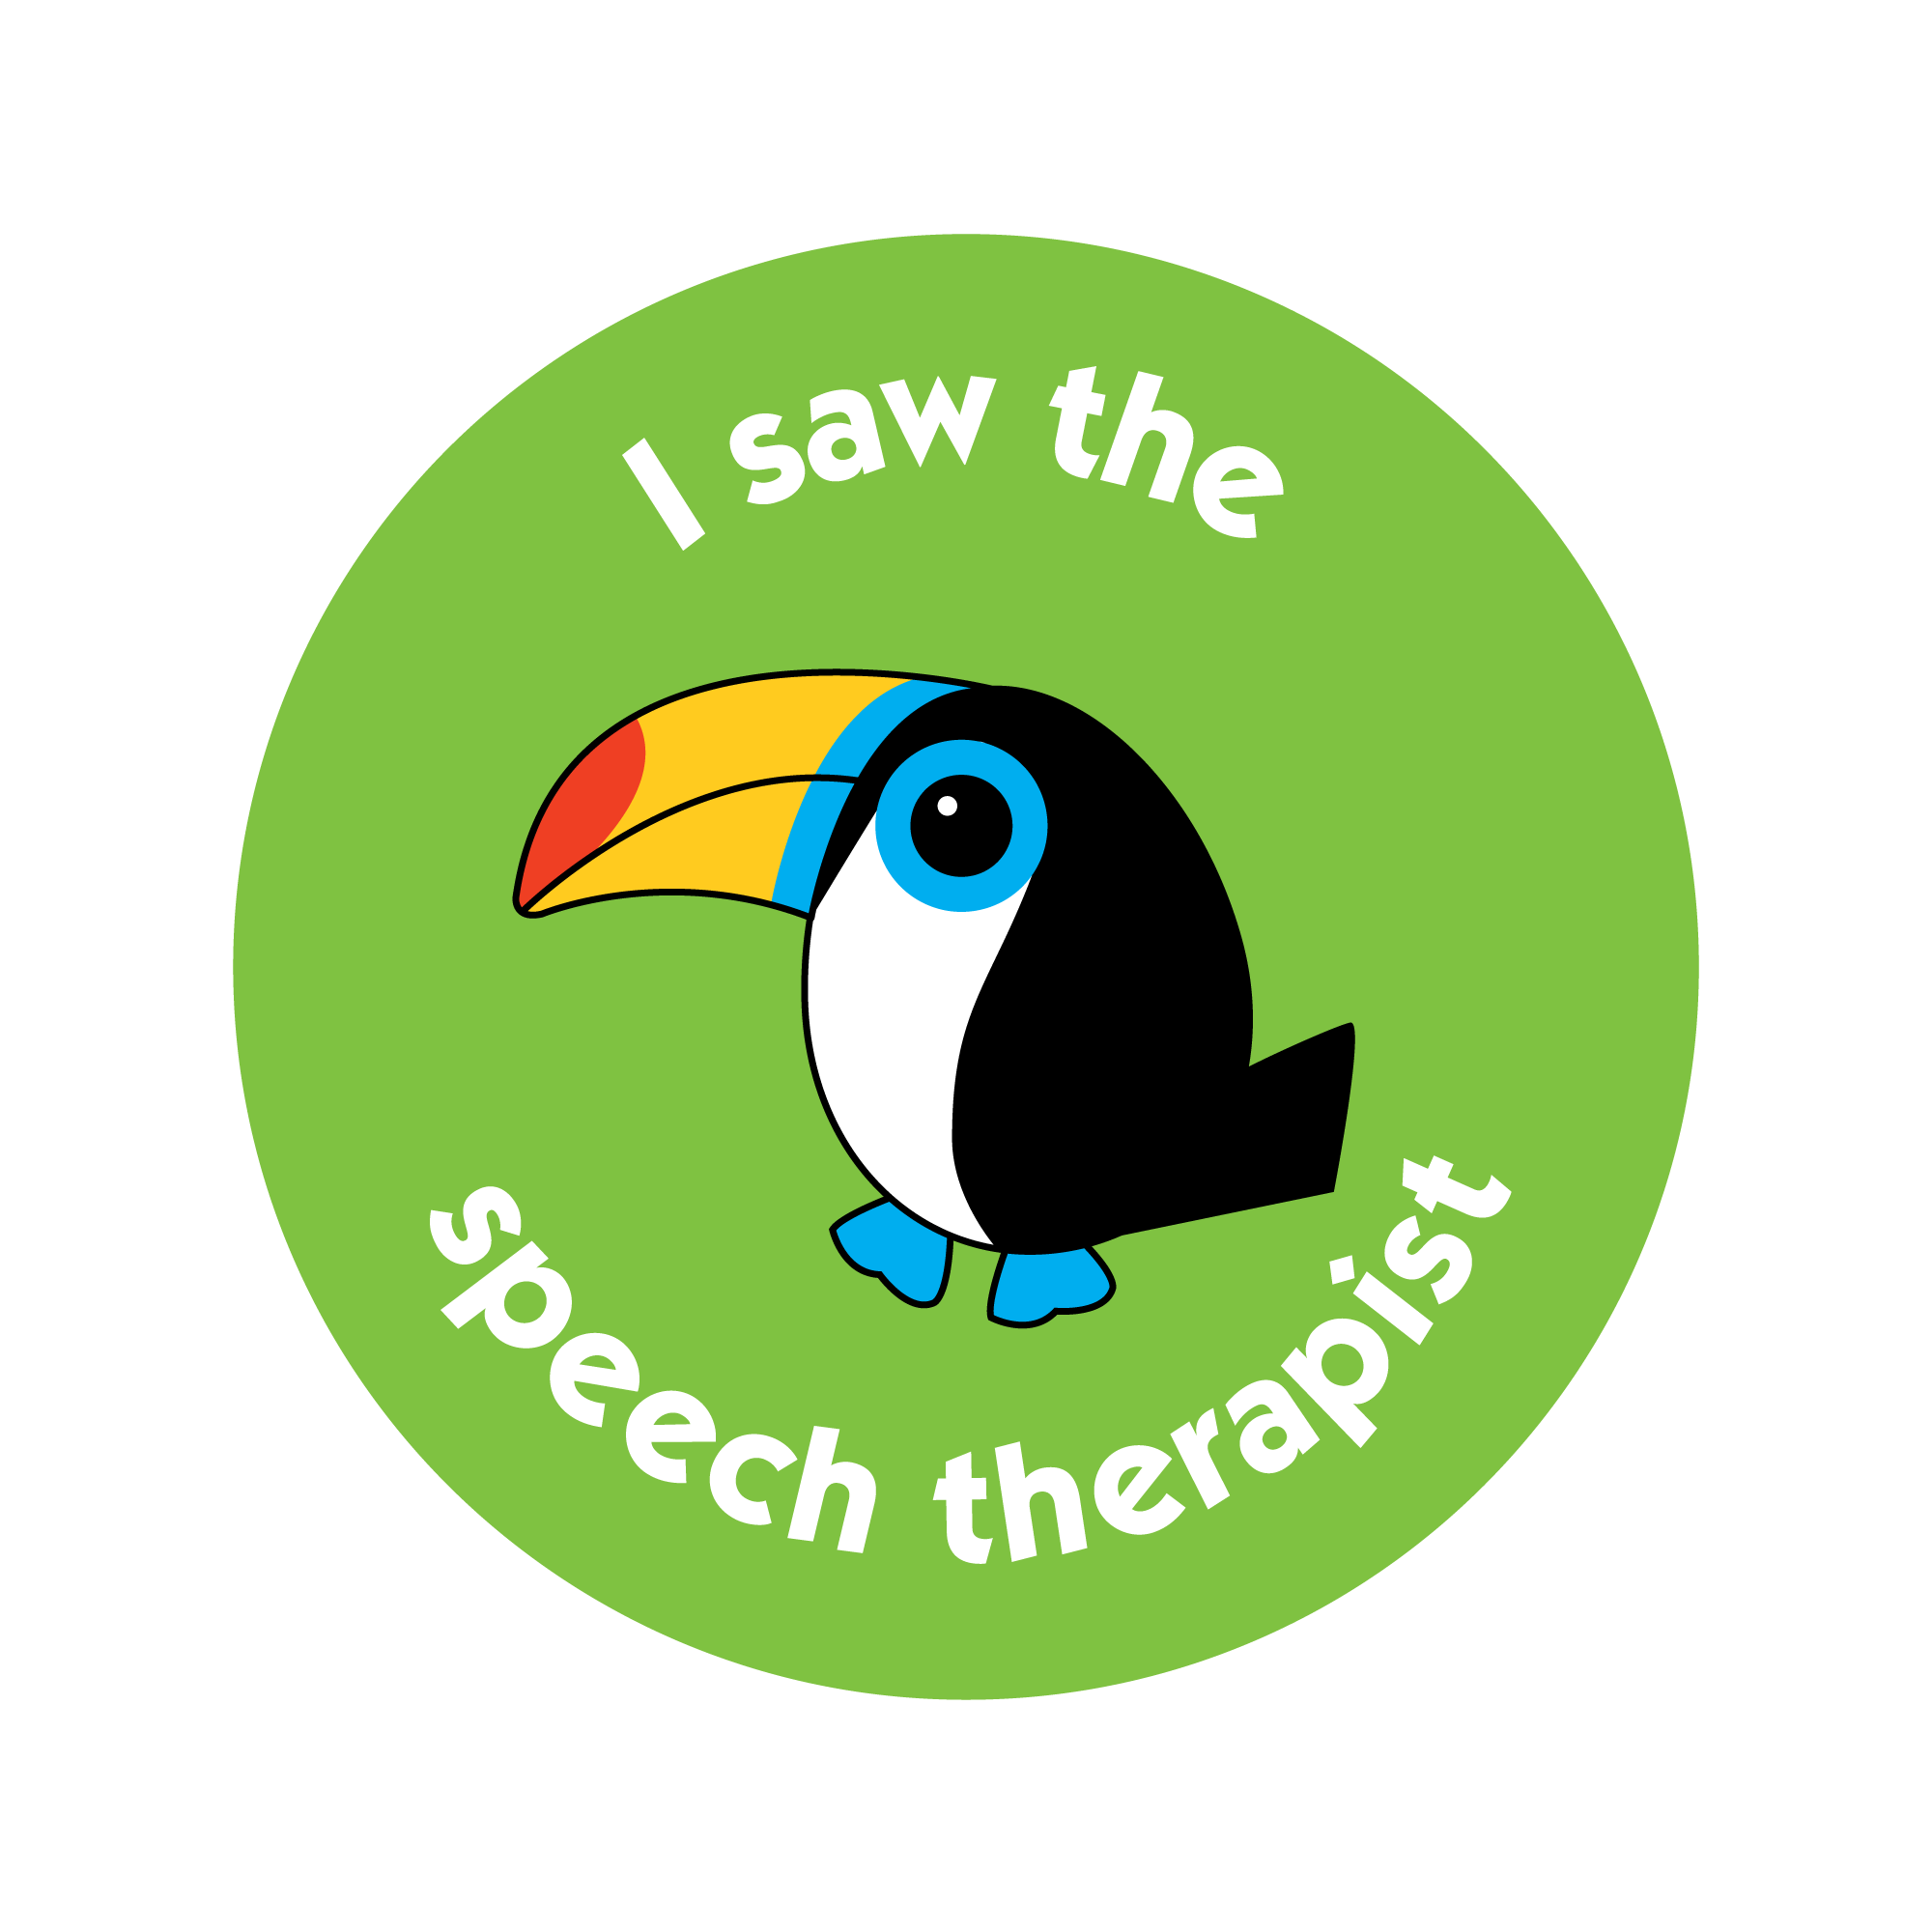 I saw the speech therapist stickers